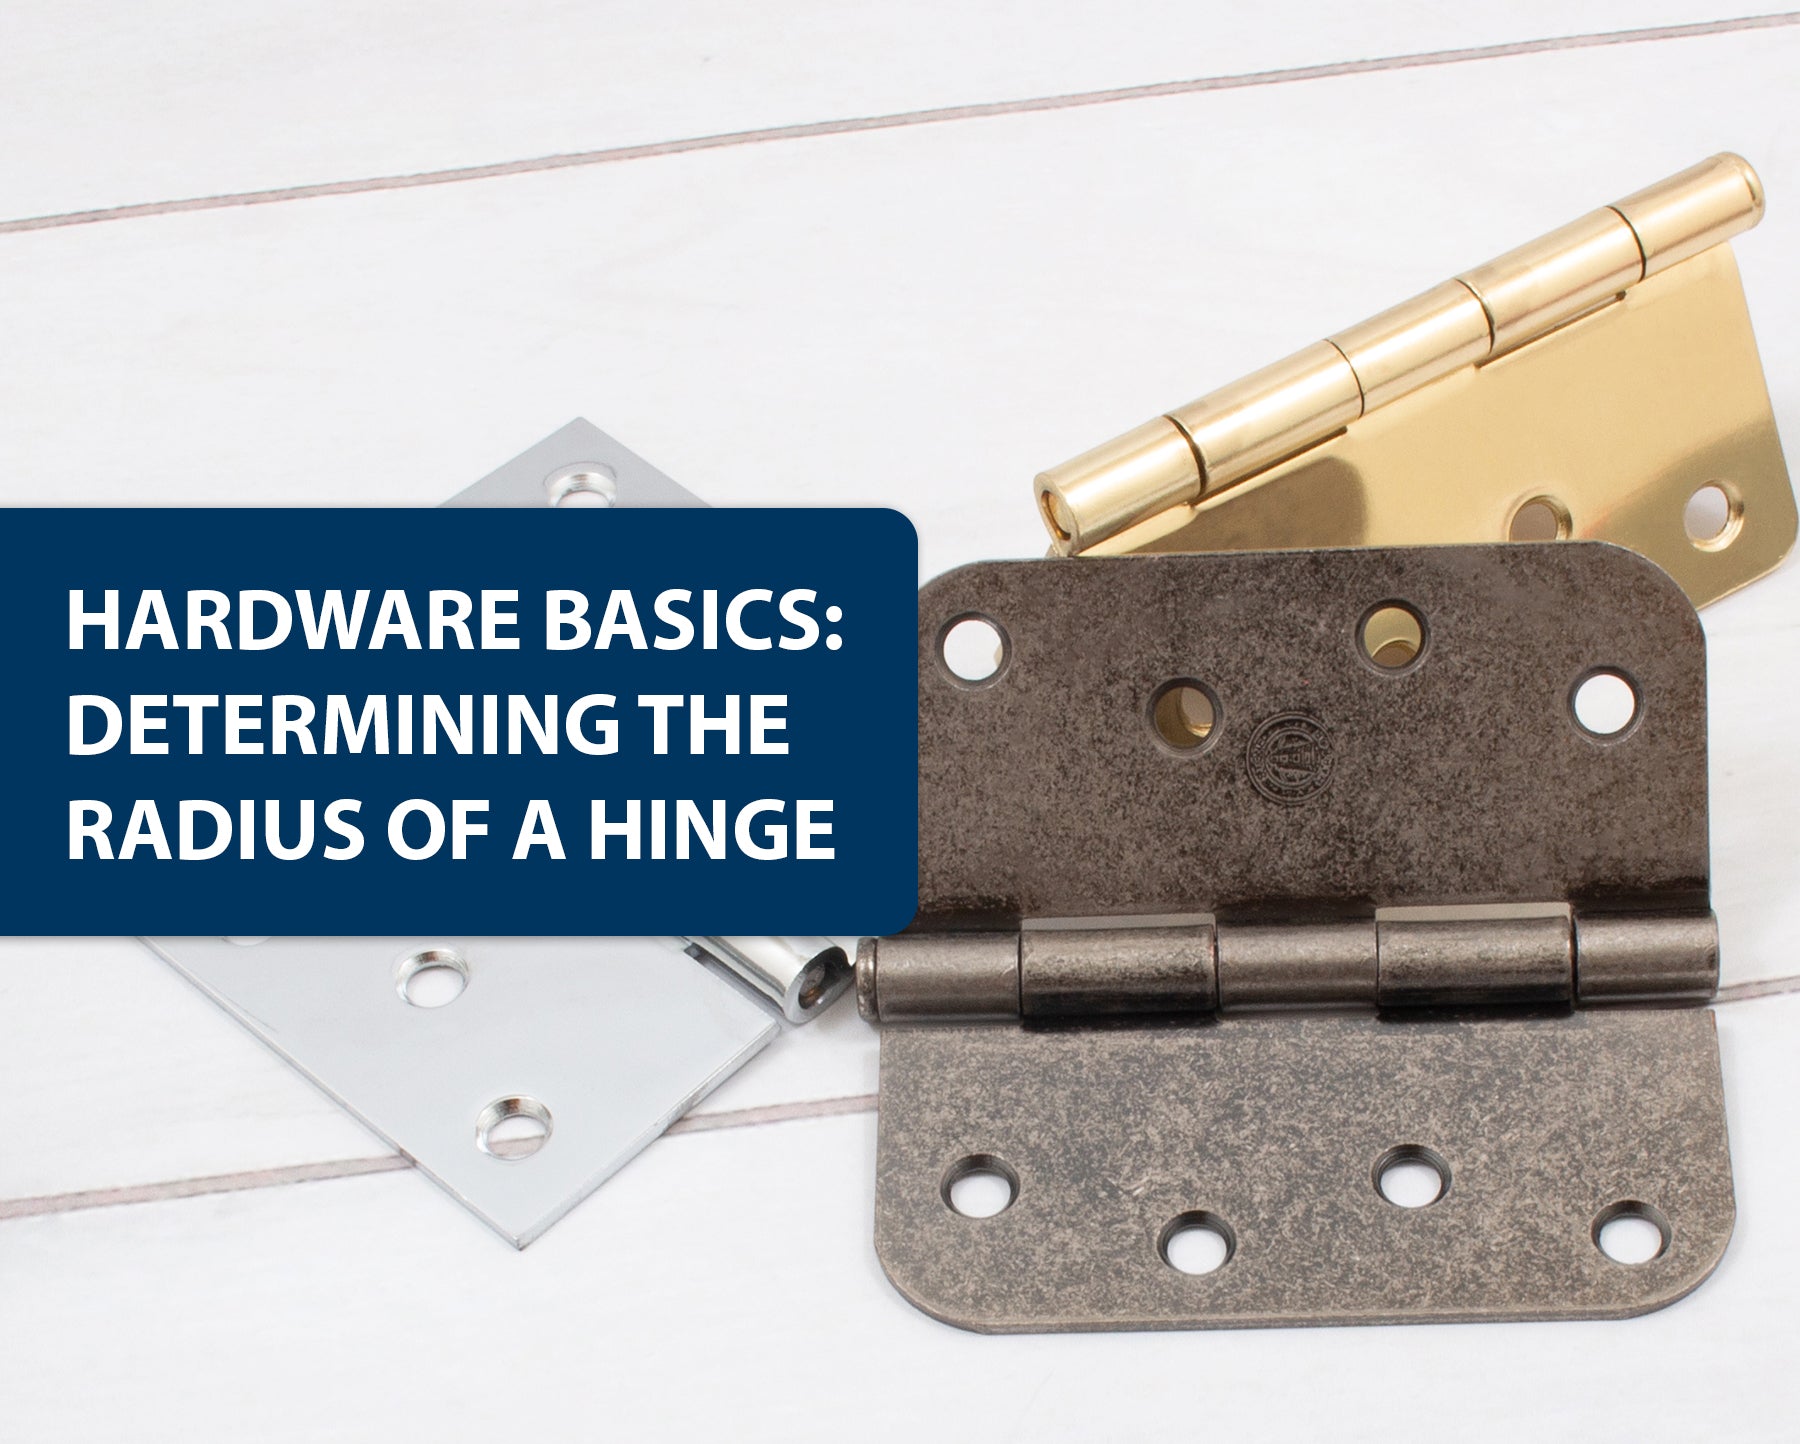 Hardware Basics: How to Determine the Radius of a Hinge